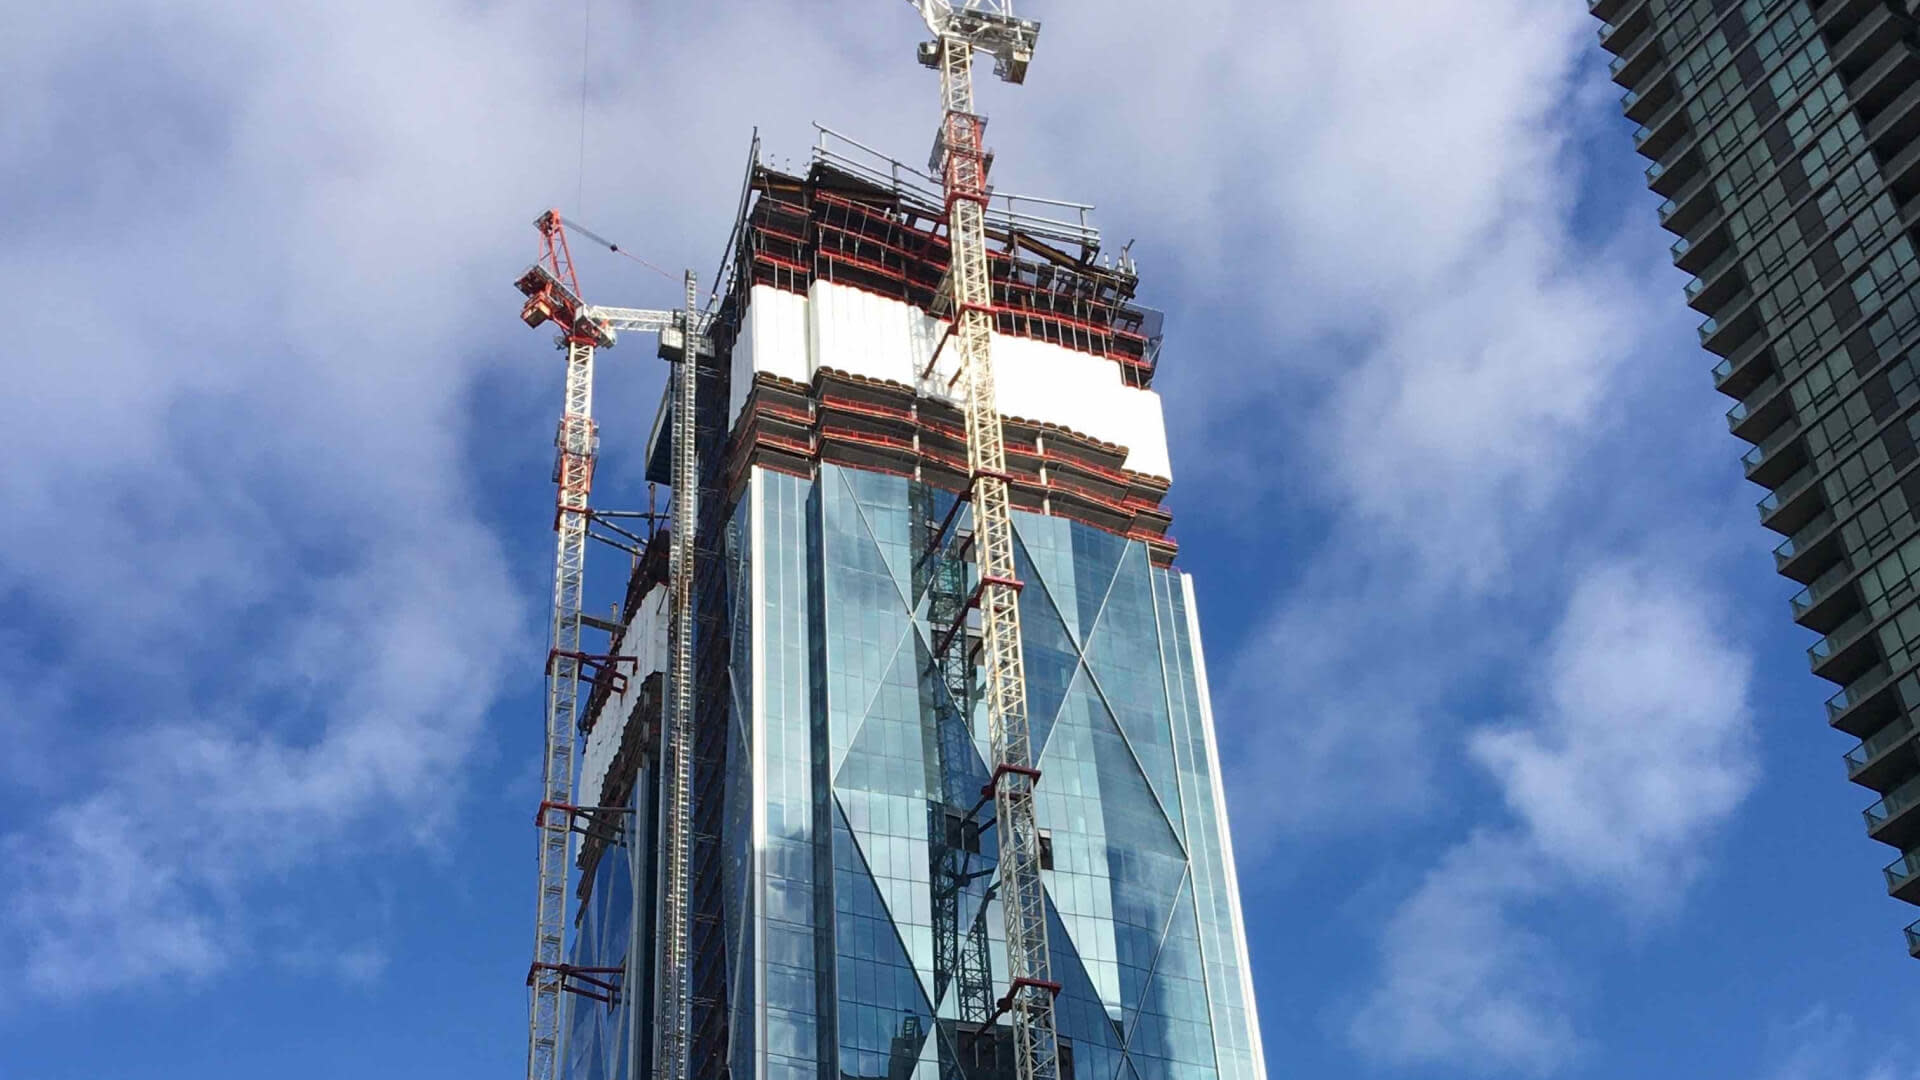 Top of a skyscraper under construction